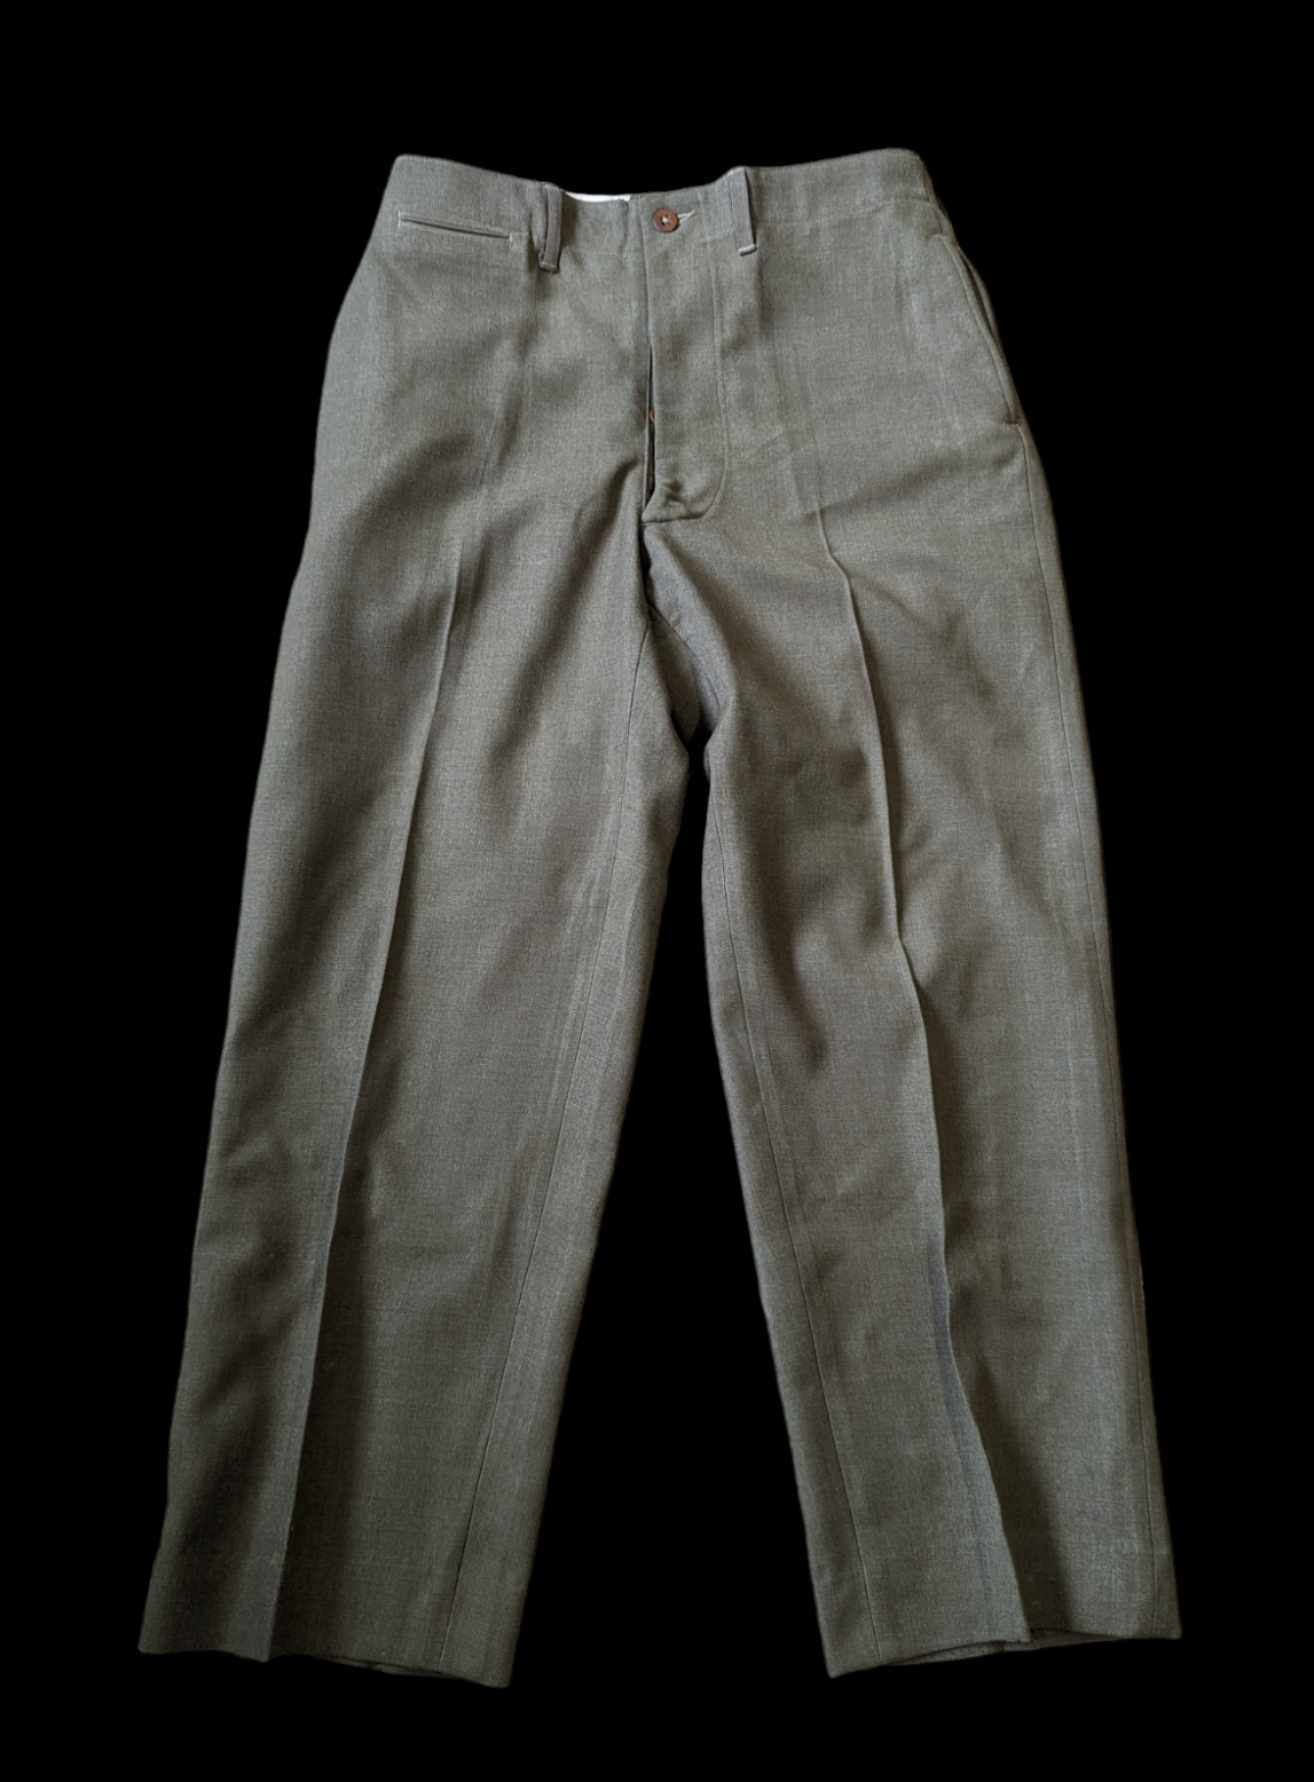 militaria : pantalon moutarde US m37 32x29/ US ww2 m37 trousers laundry